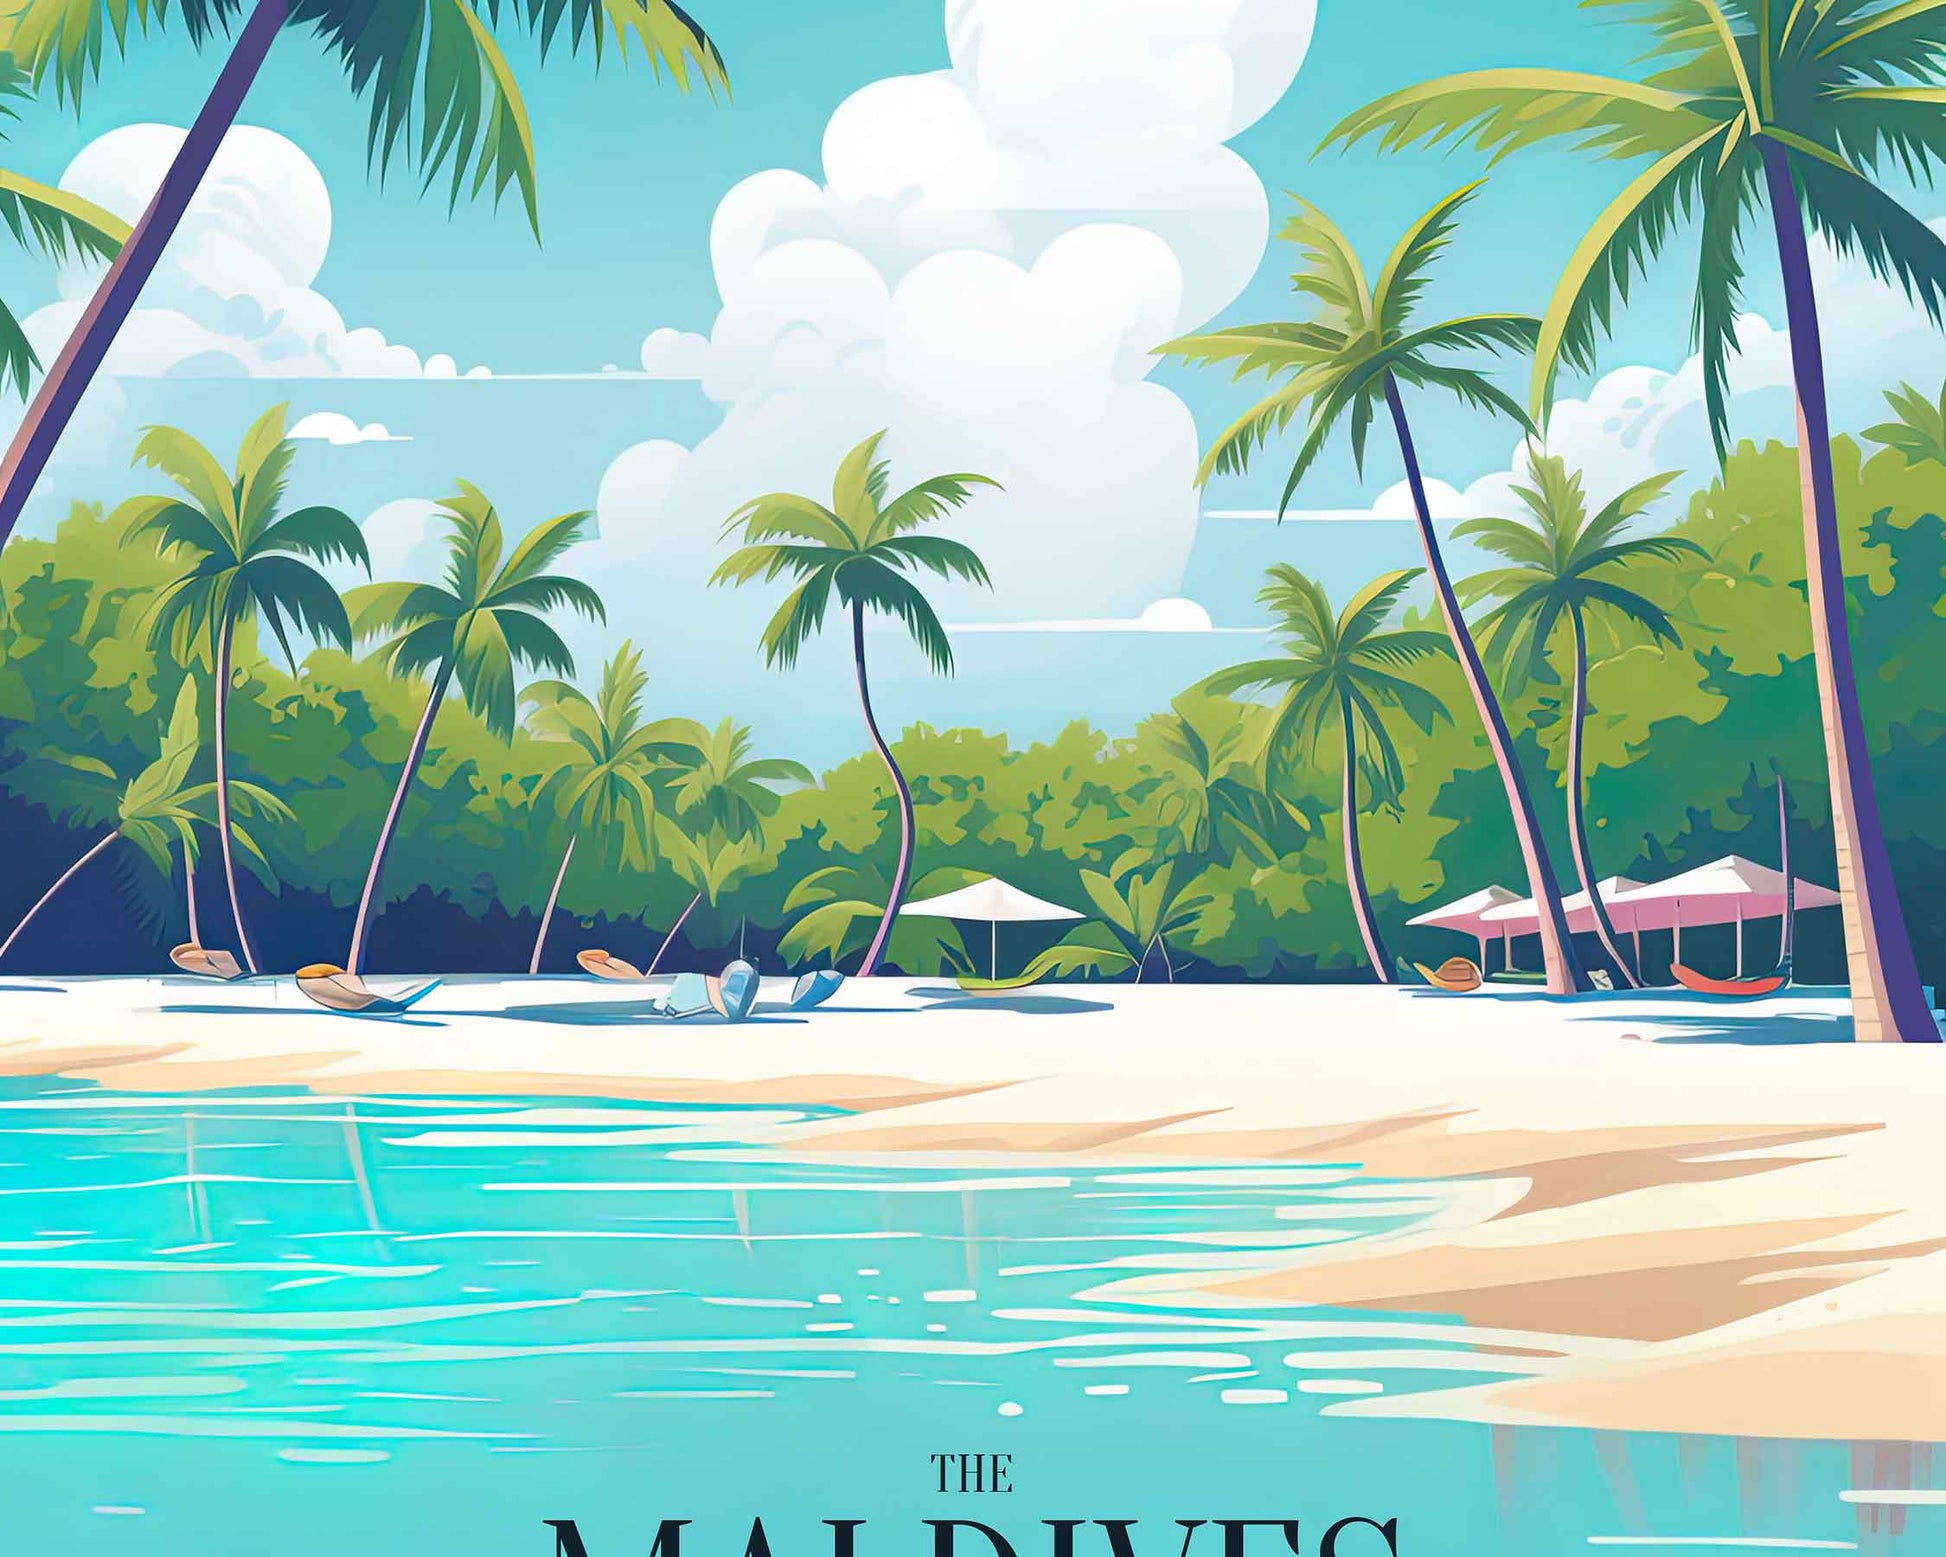 Framed Image of Maldives Travel Posters Illustration Wall Art Tropical Prints